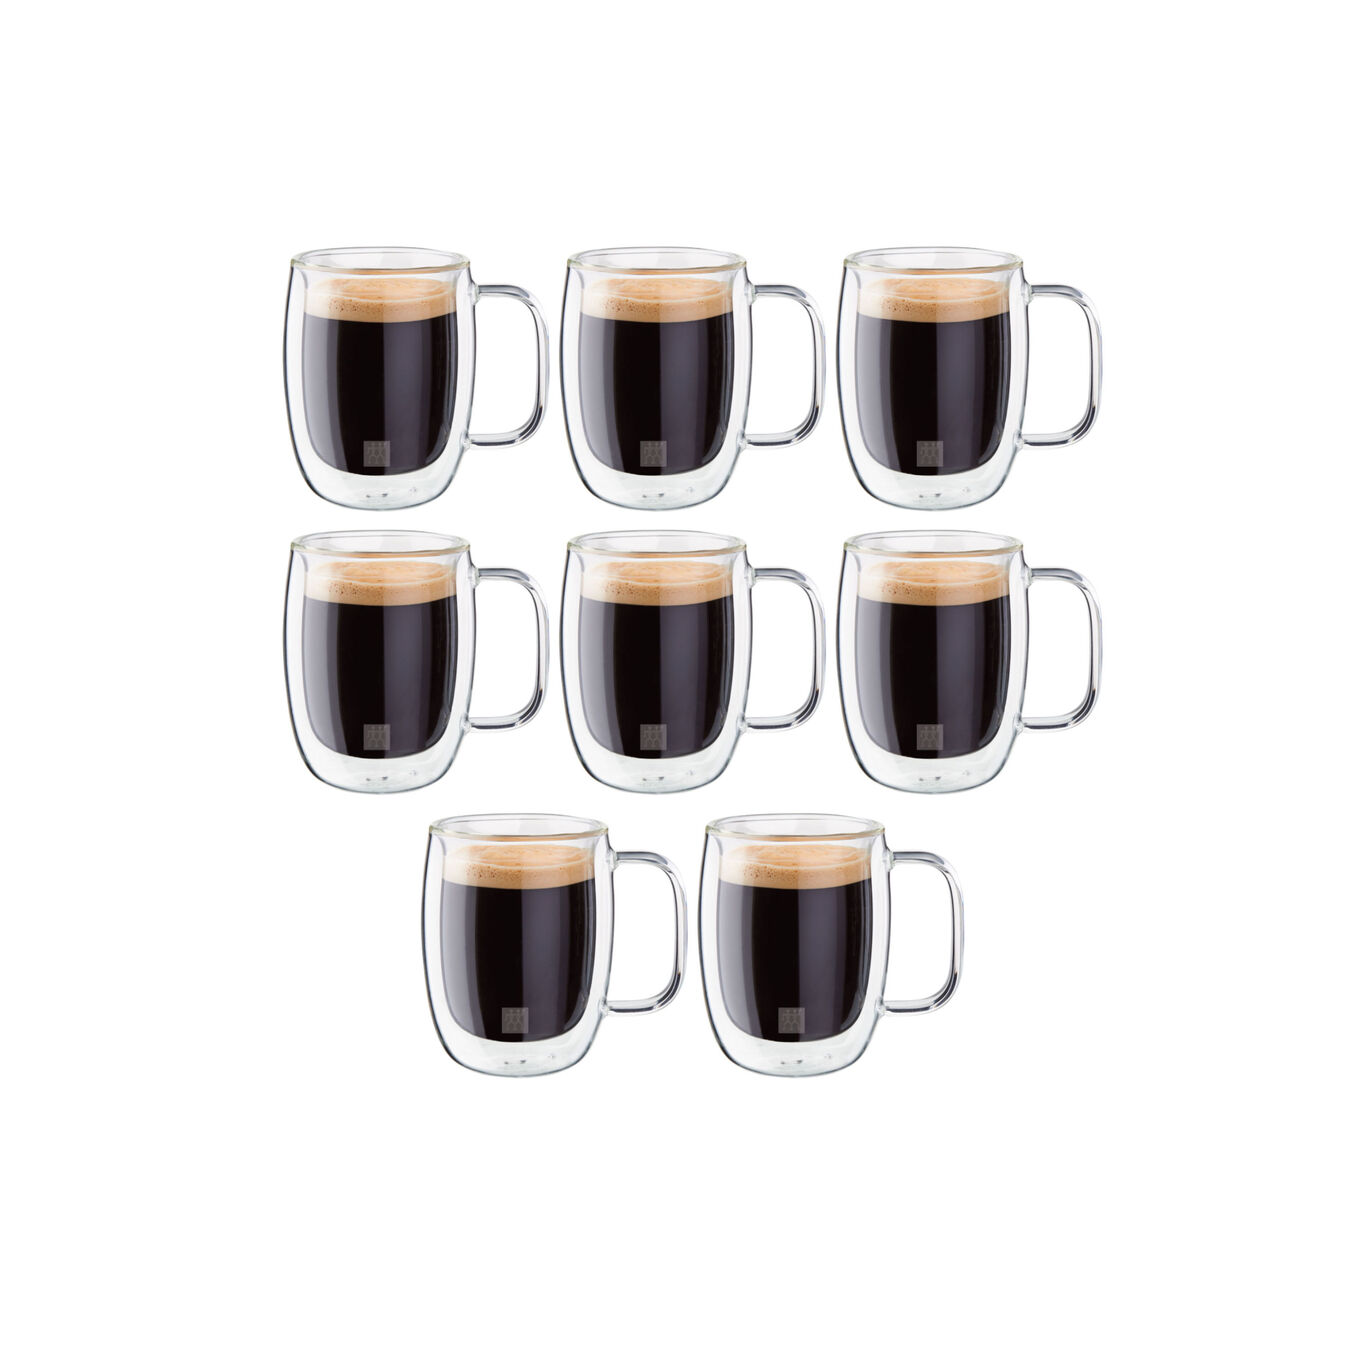 8 Piece Espresso Mug Set - Value Pack,,large 2